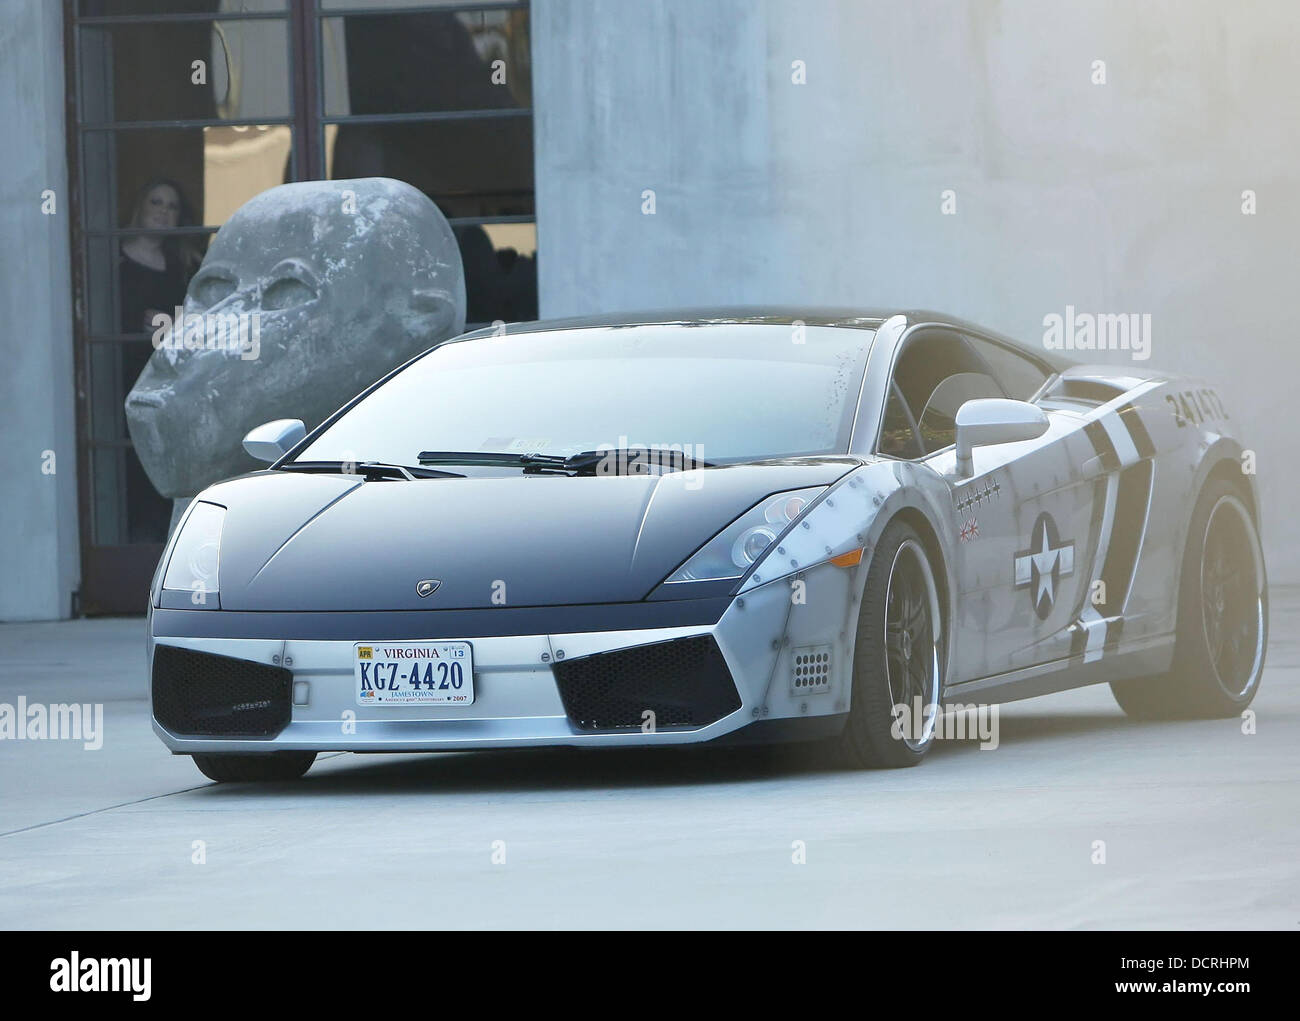 Chris Brown waits in his customized Lamborghini Gallardo for his girlfriend  Karrueche Tran who was shopping at nearby Maxfield West Hollywood,  California  Stock Photo - Alamy